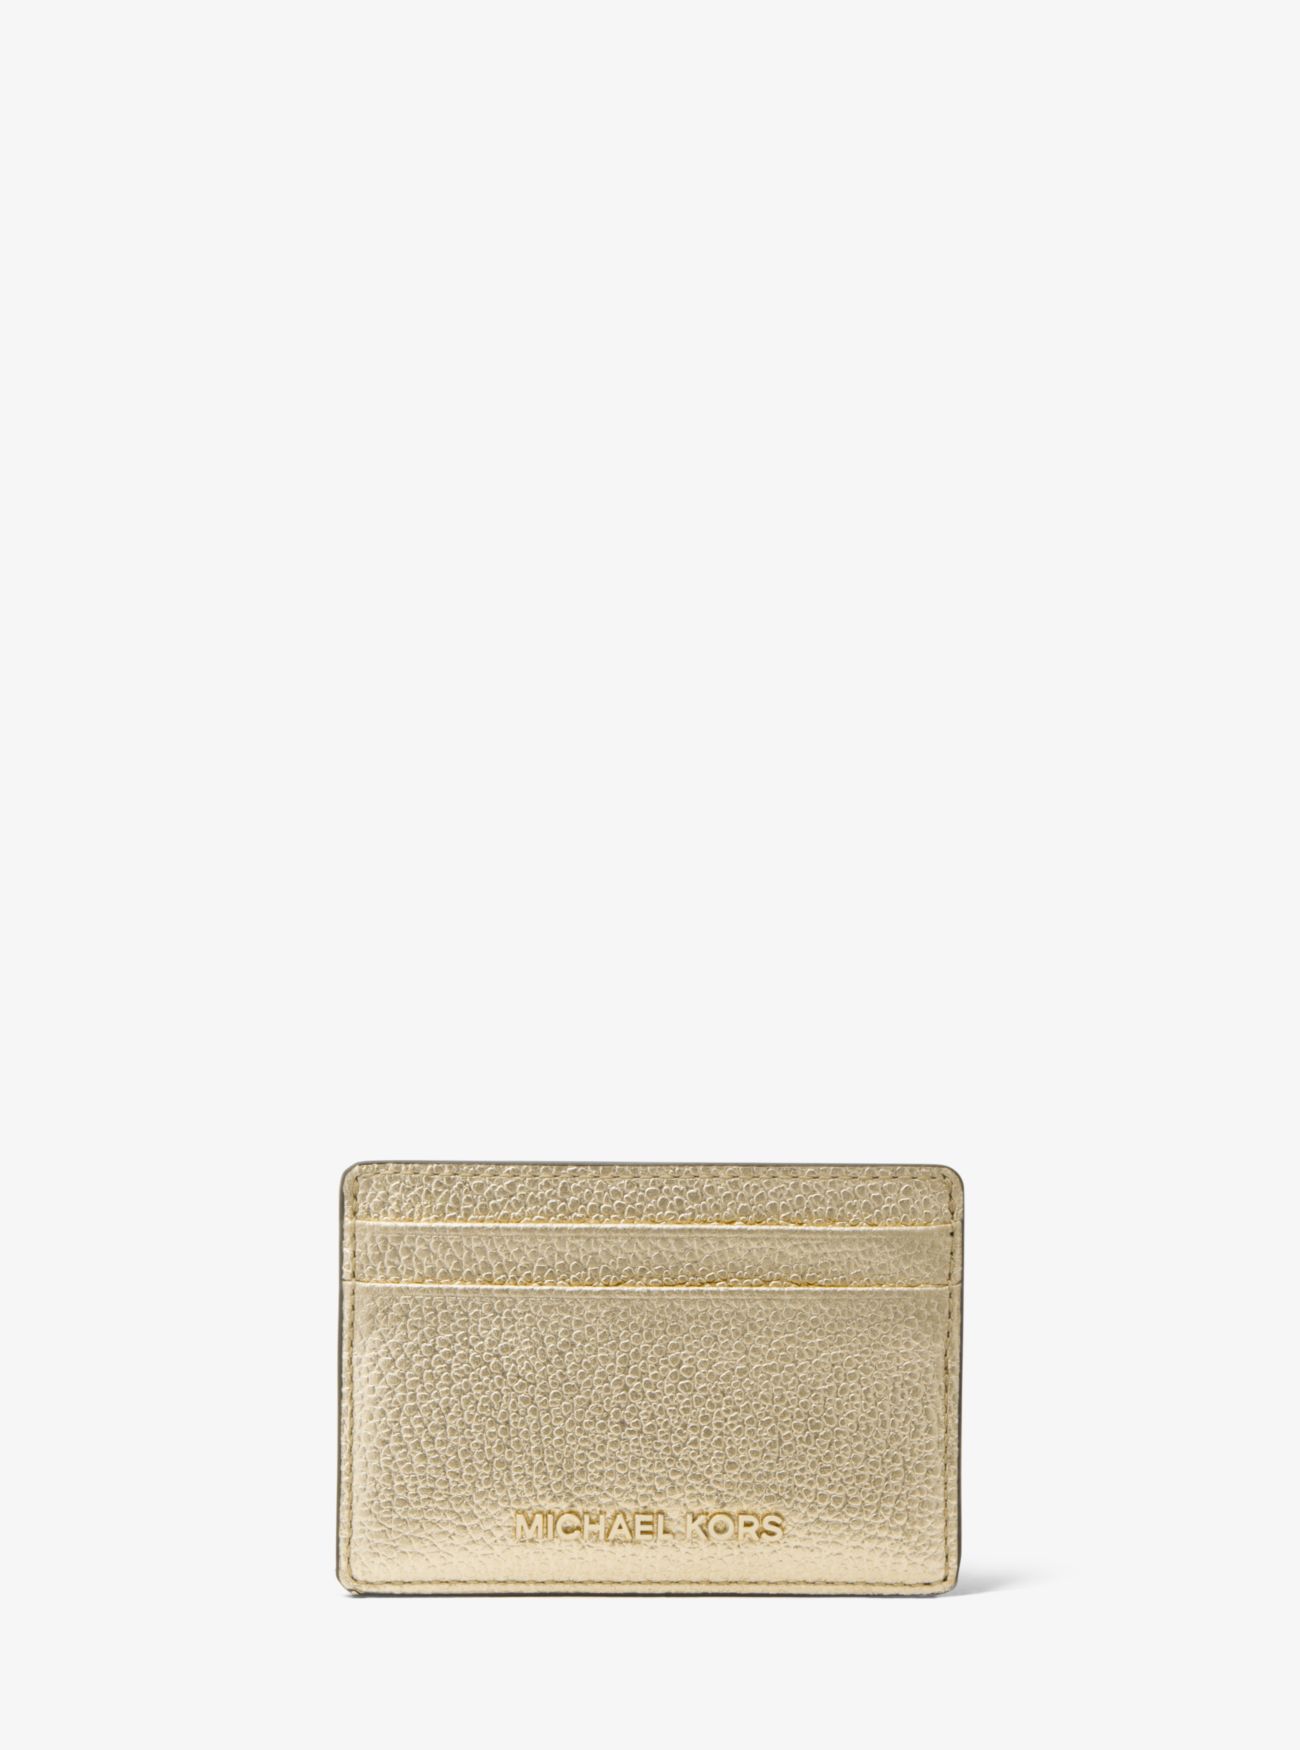 MK Metallic Pebbled Leather Card Case - Gold - Michael Kors